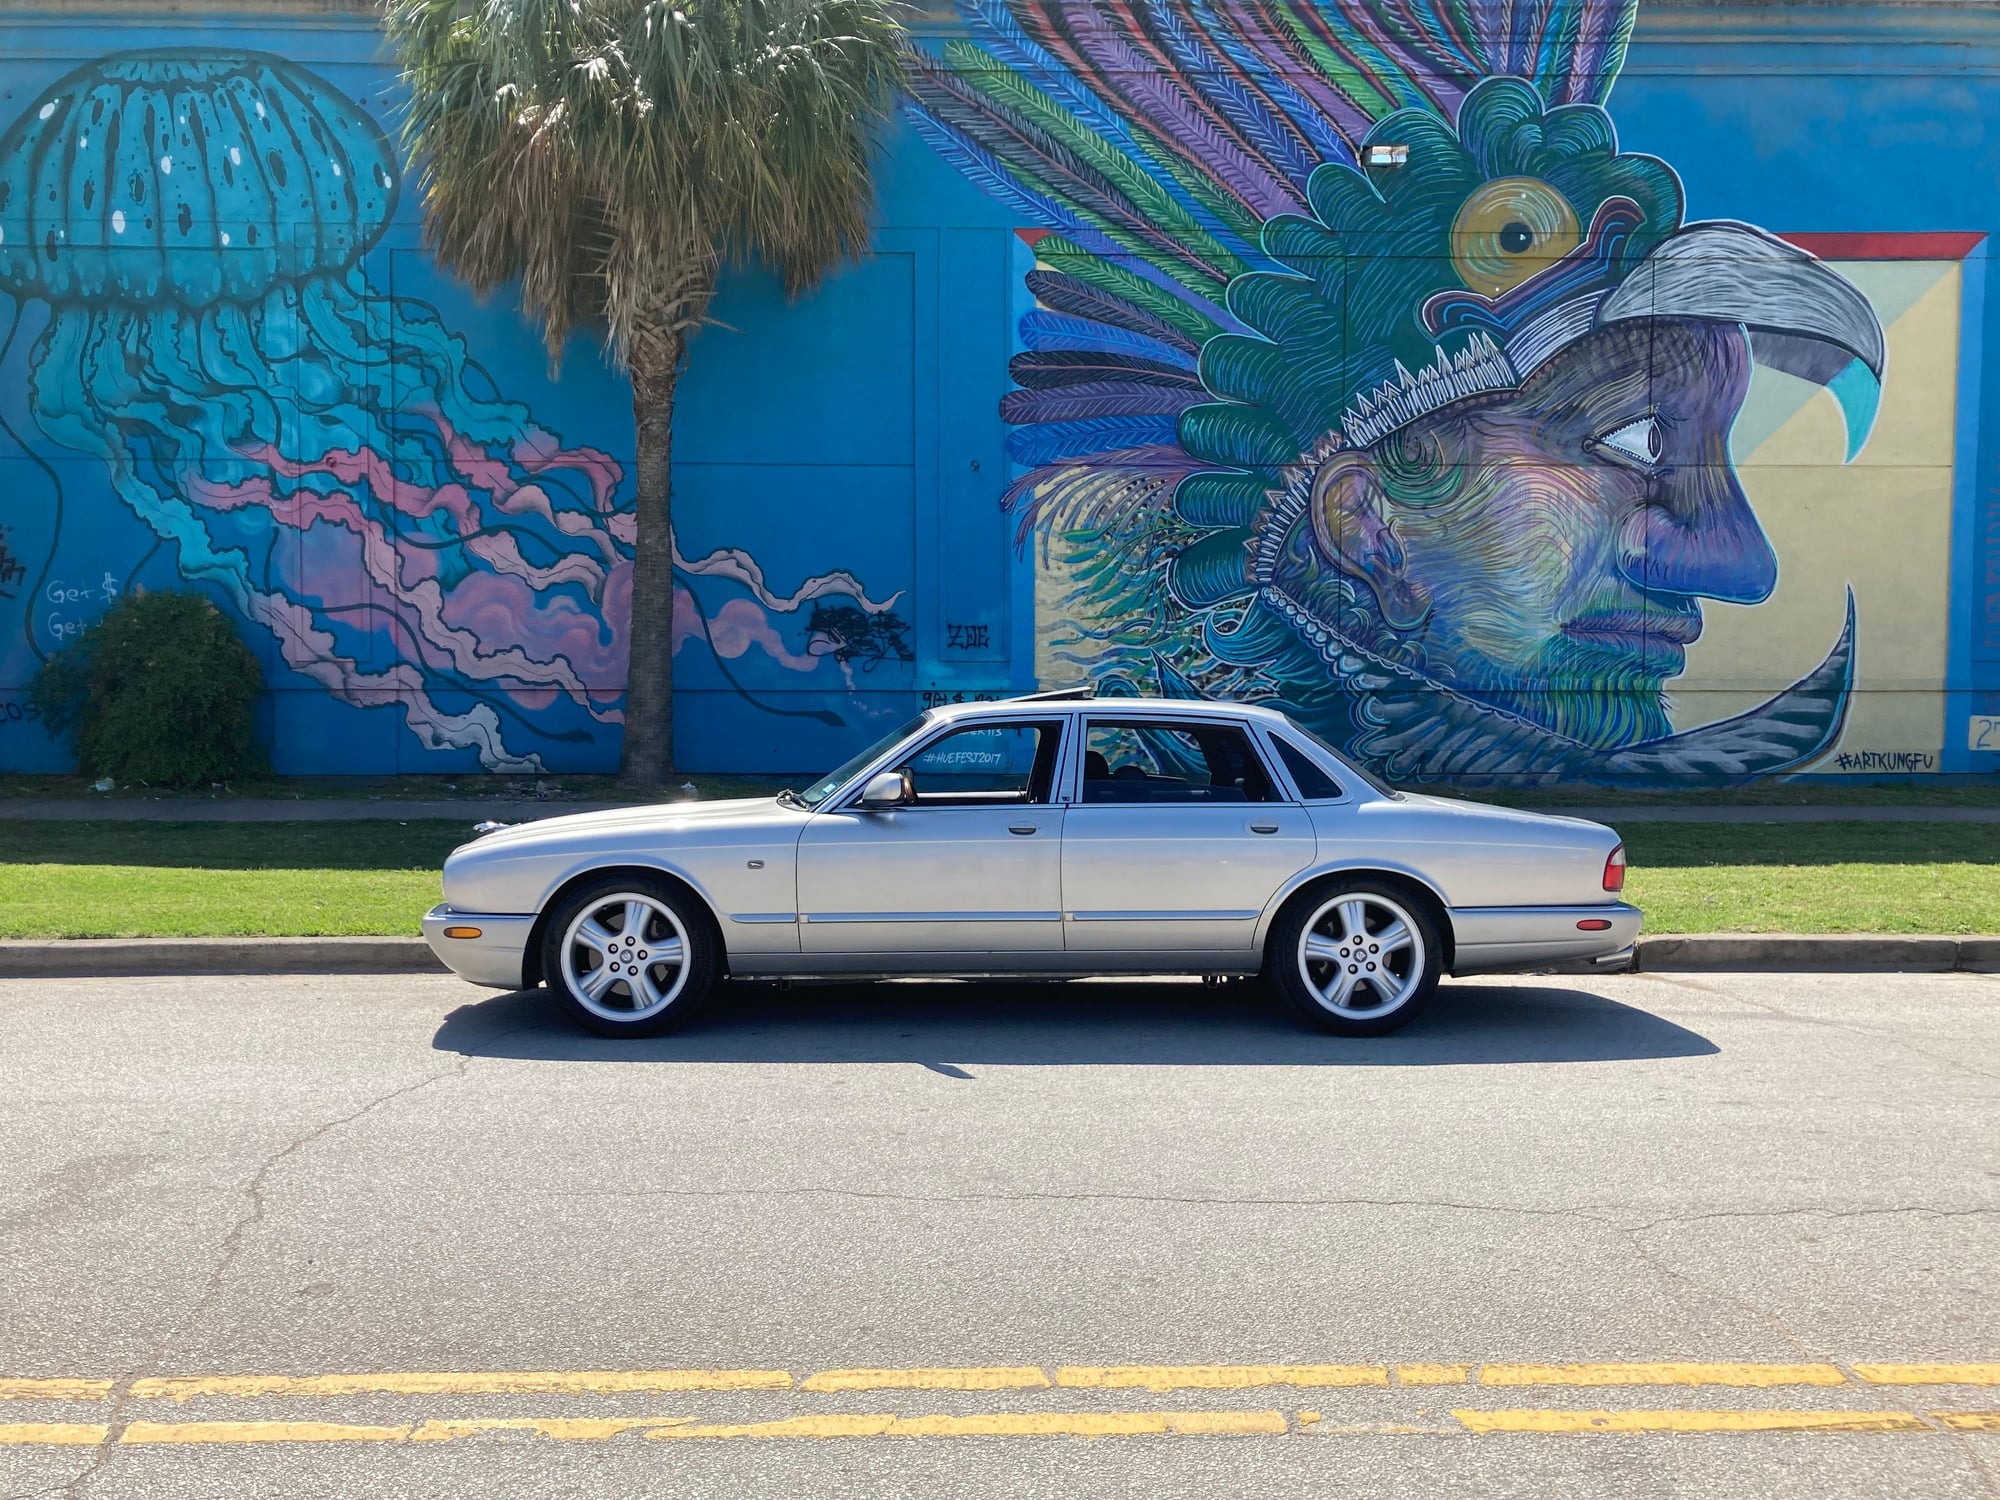 1999 Jaguar XJR - 99 XJR in Houston. - Used - VIN Sajpx1848xc860777 - 76,800 Miles - 8 cyl - 2WD - Automatic - Sedan - Silver - Houston, TX 77078, United States